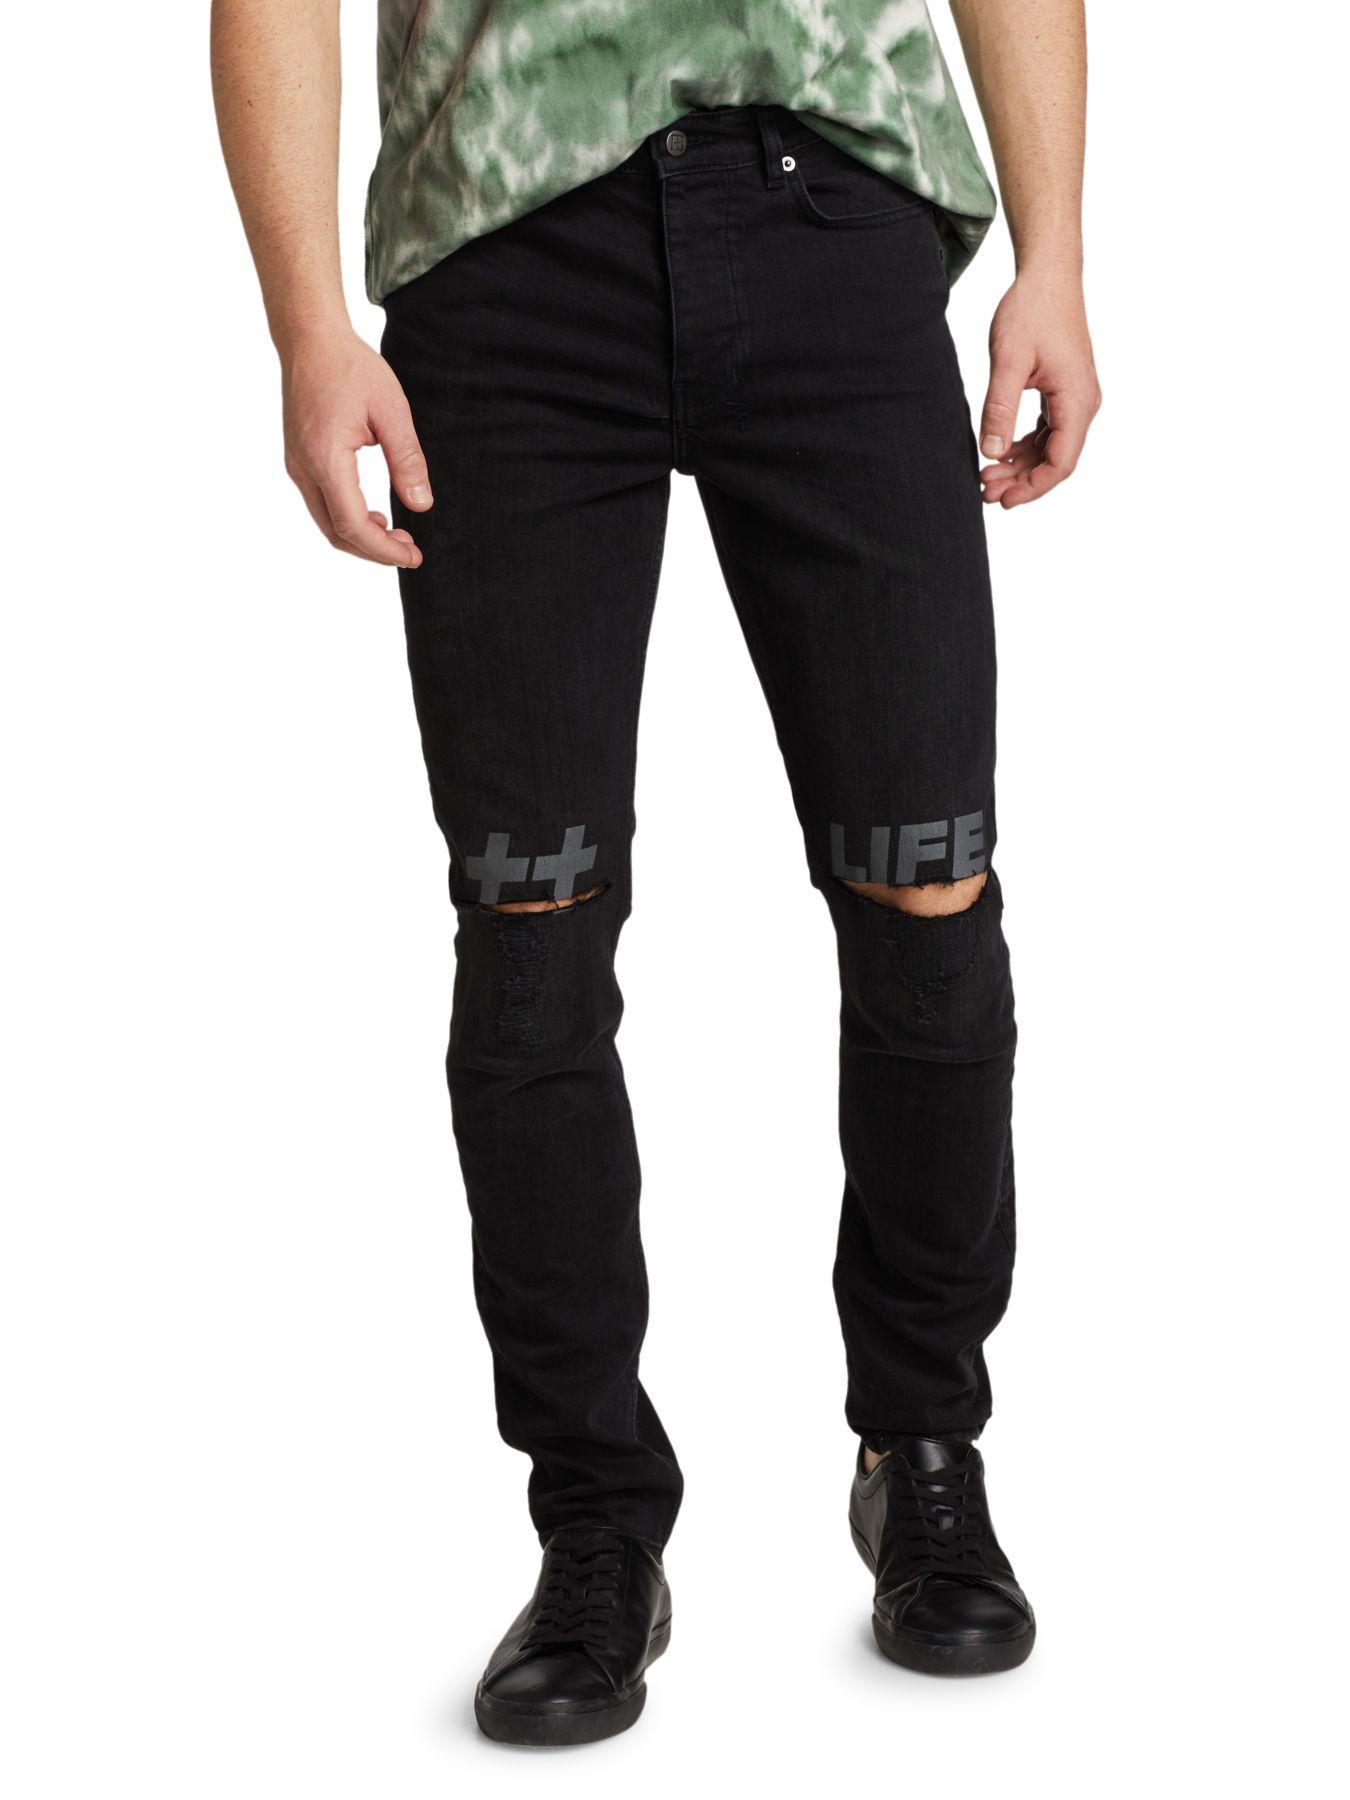 Ksubi Denim Chitch Distressed Skinny Jeans in Black for Men - Lyst